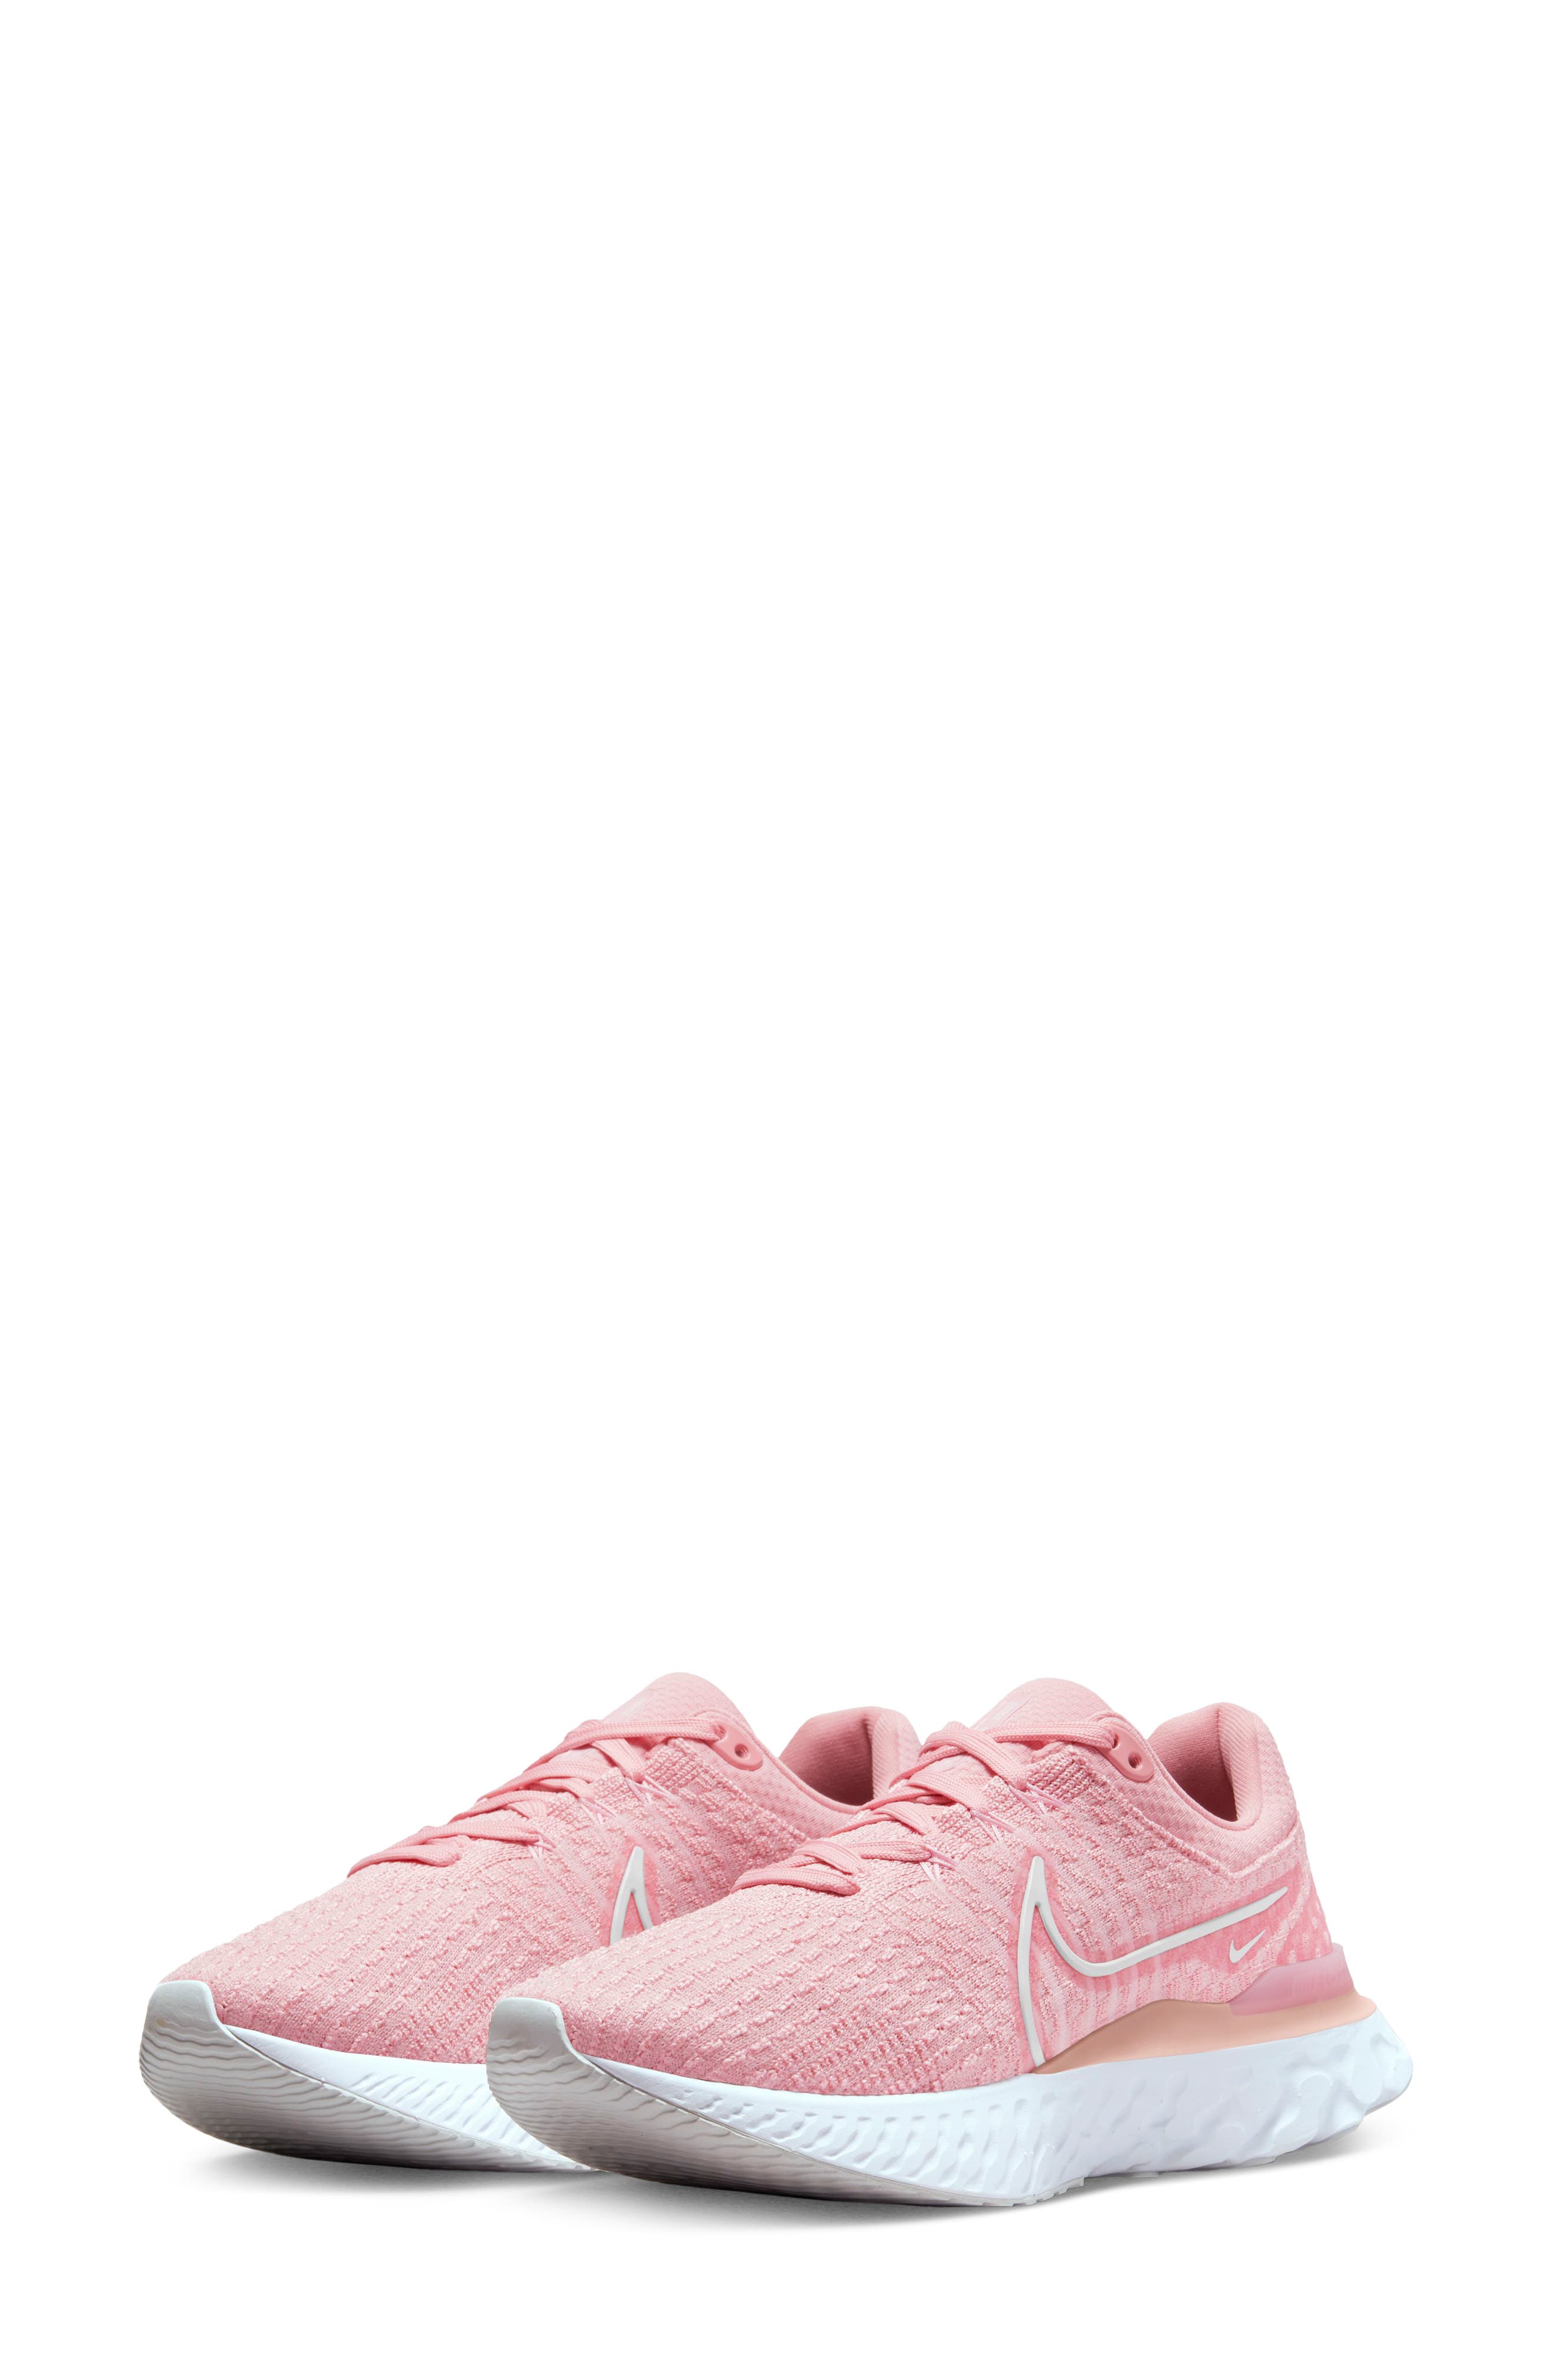 nike women running shoes pink